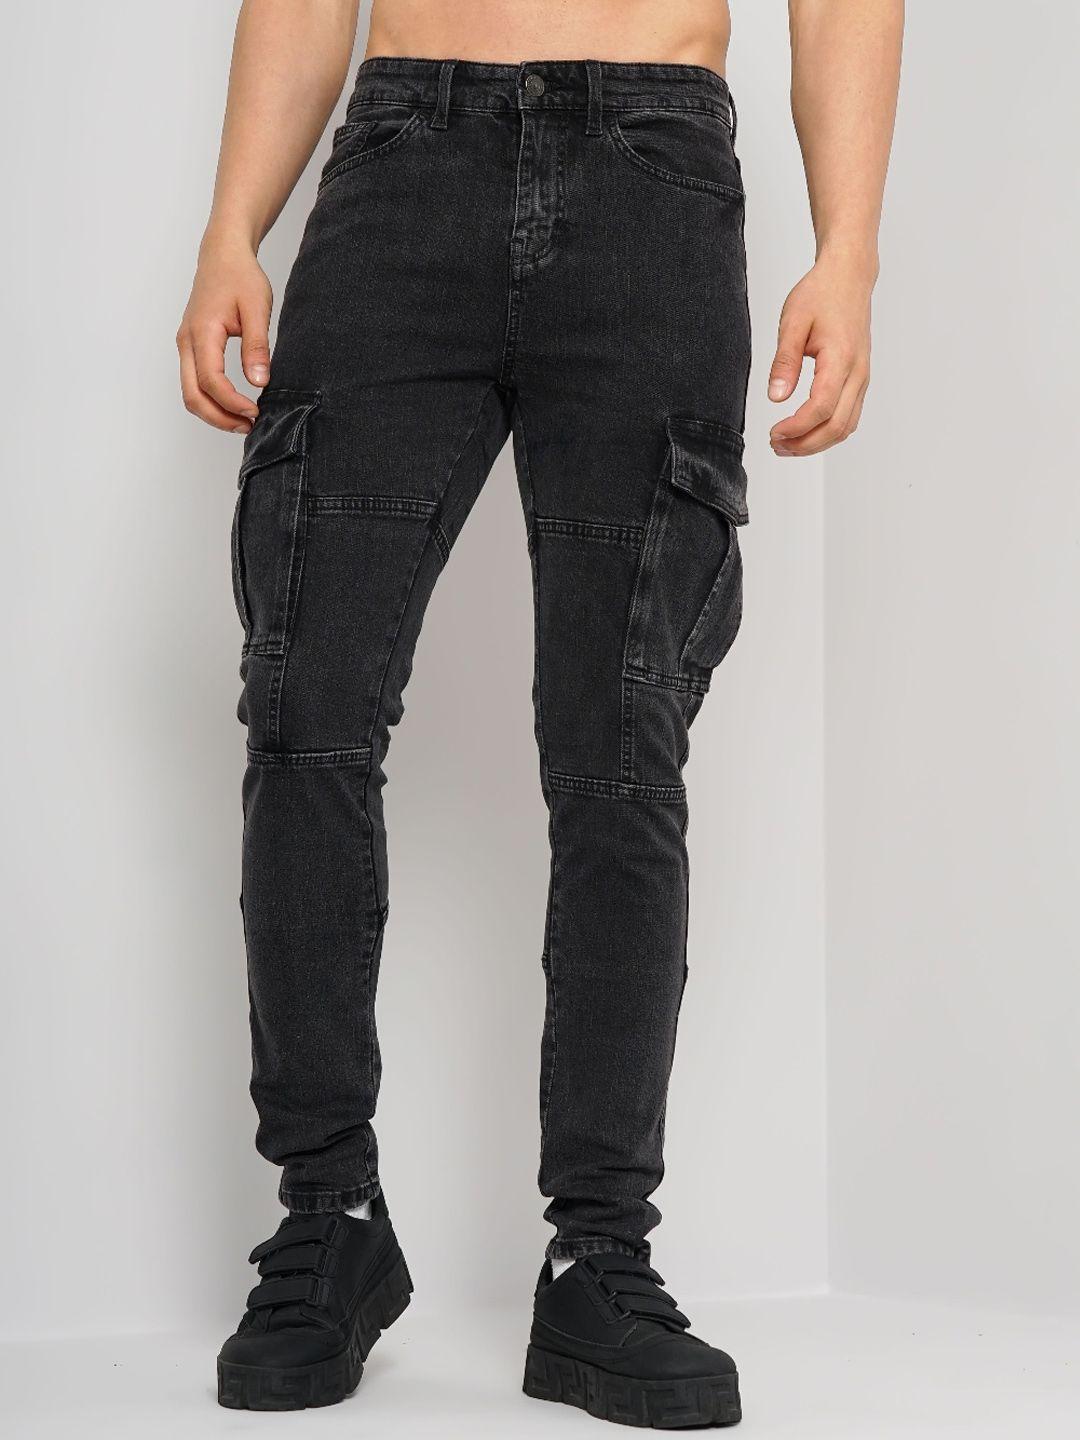 celio men jean clean look skinny fit low-rise cotton stretchable jeans